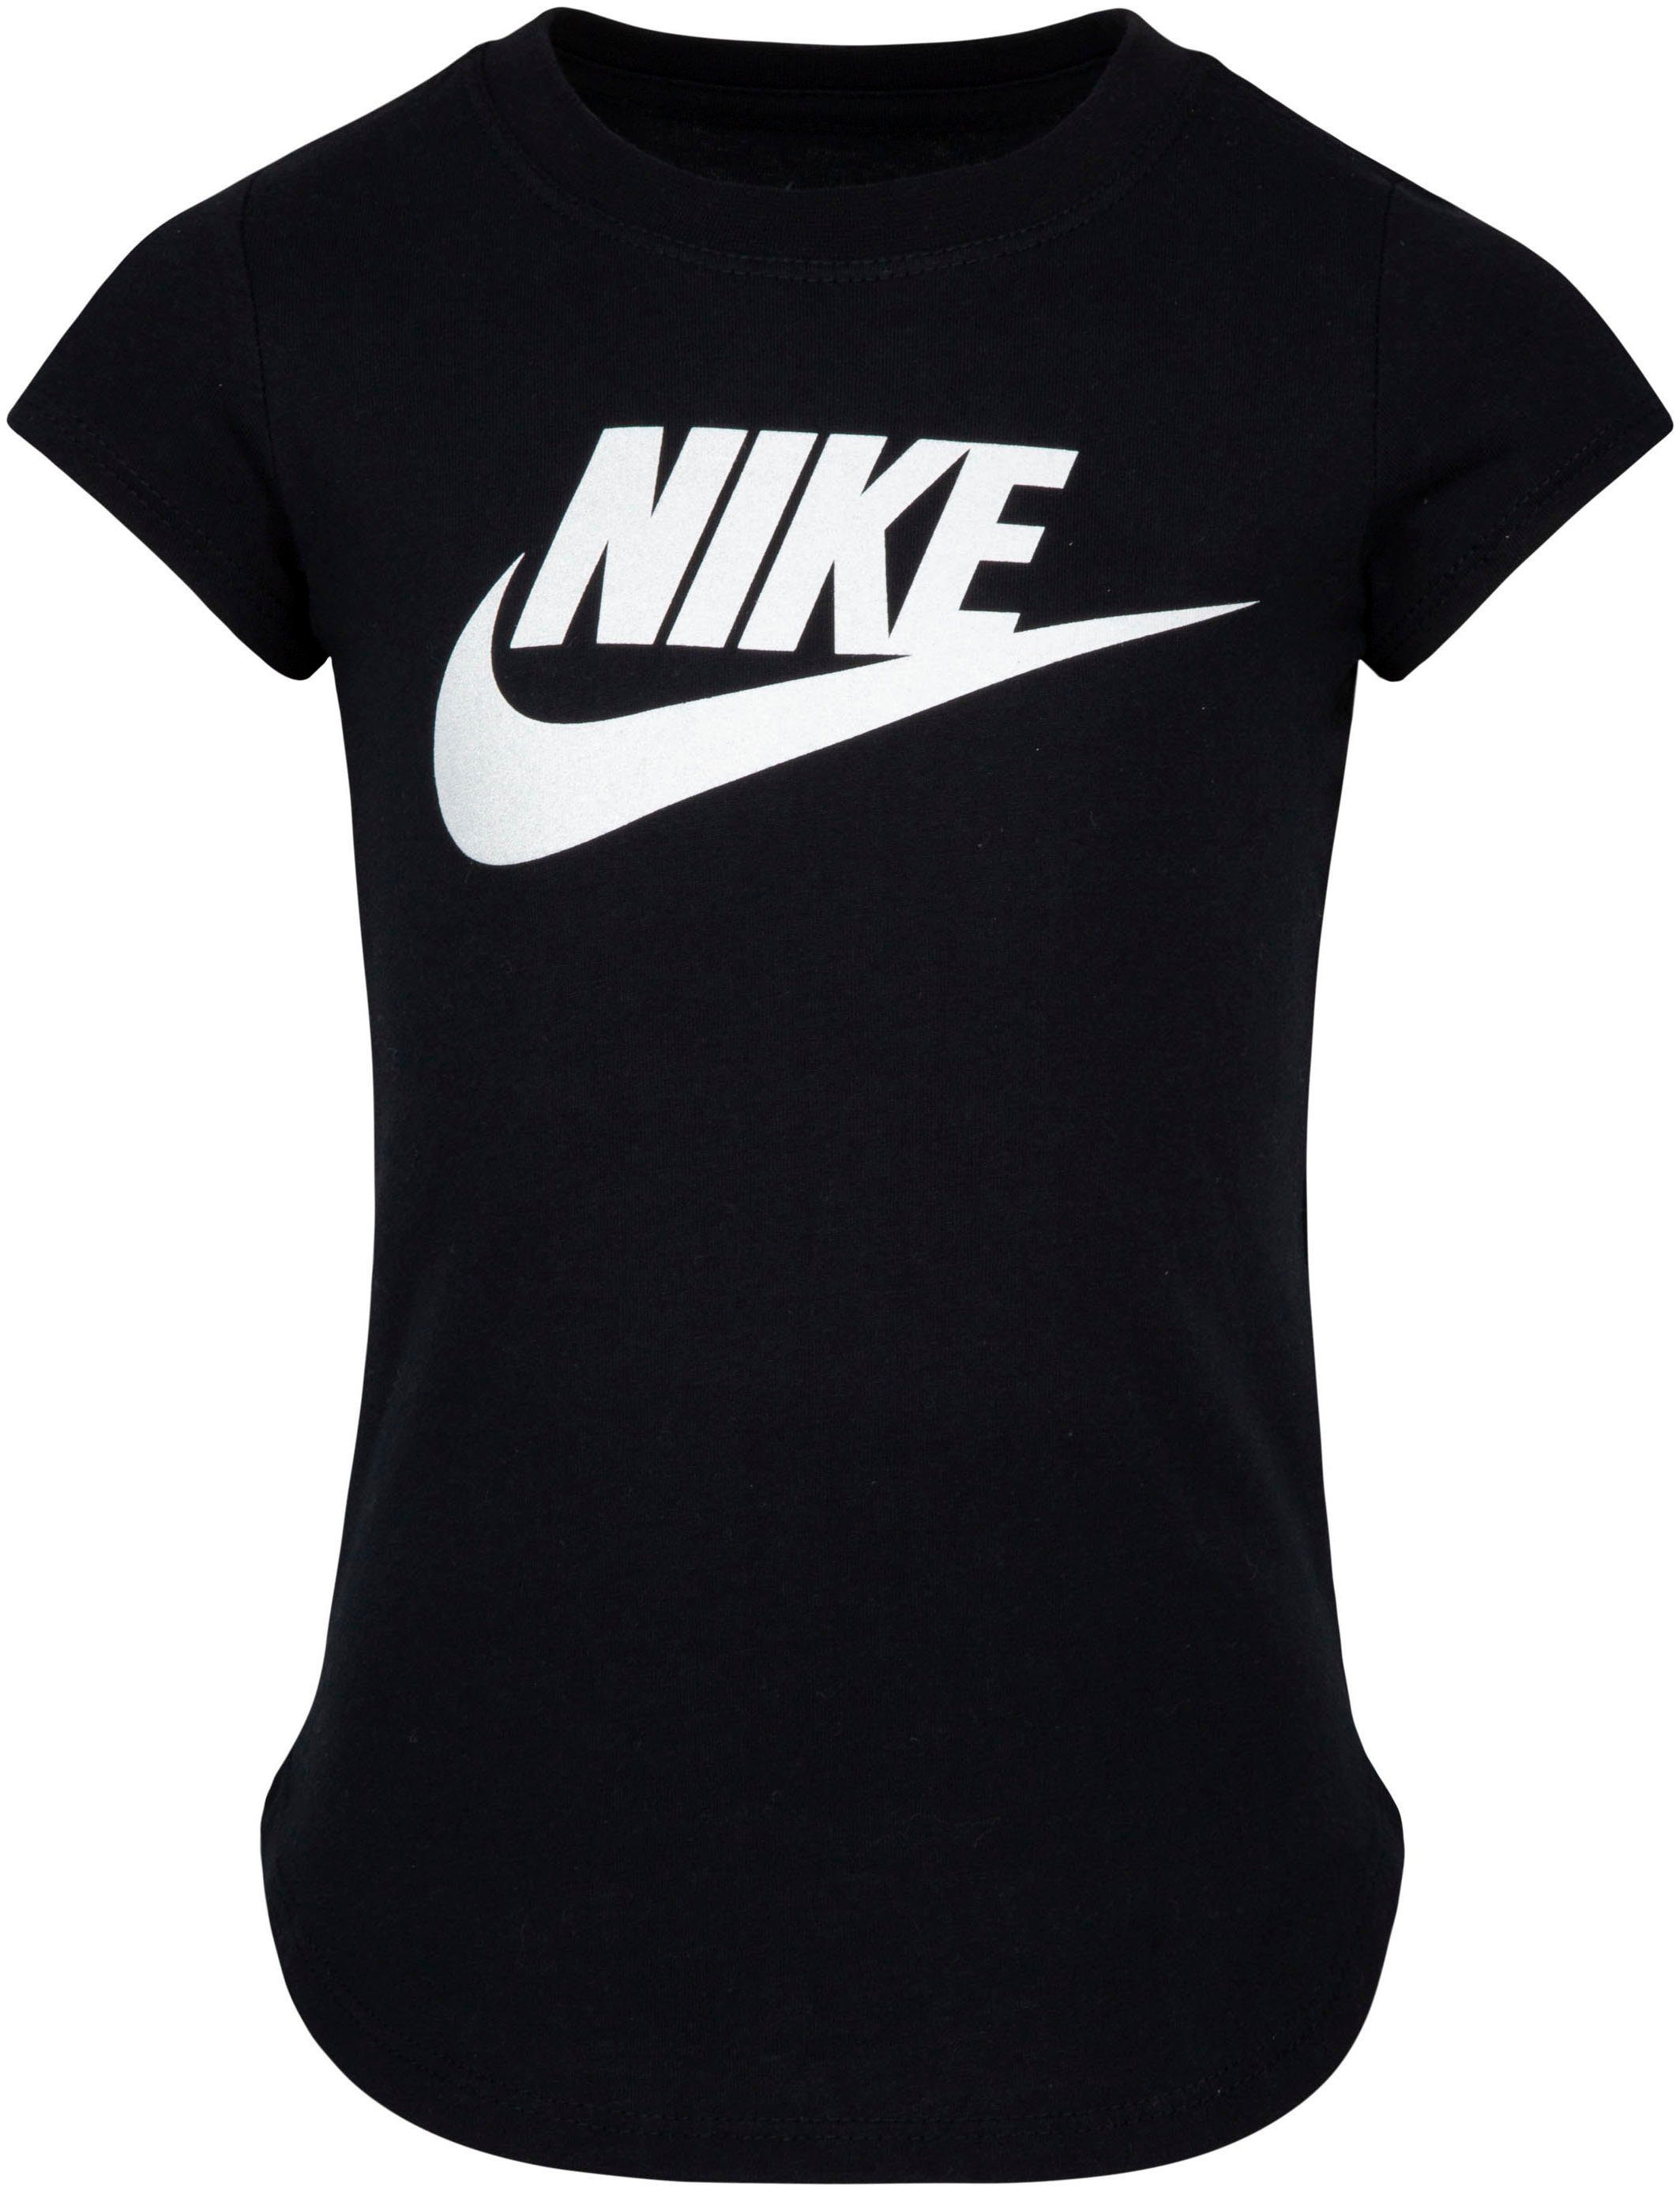 Nike Sportswear - Kinder T-Shirt TEE SLEEVE schwarz FUTURA SHORT NIKE für